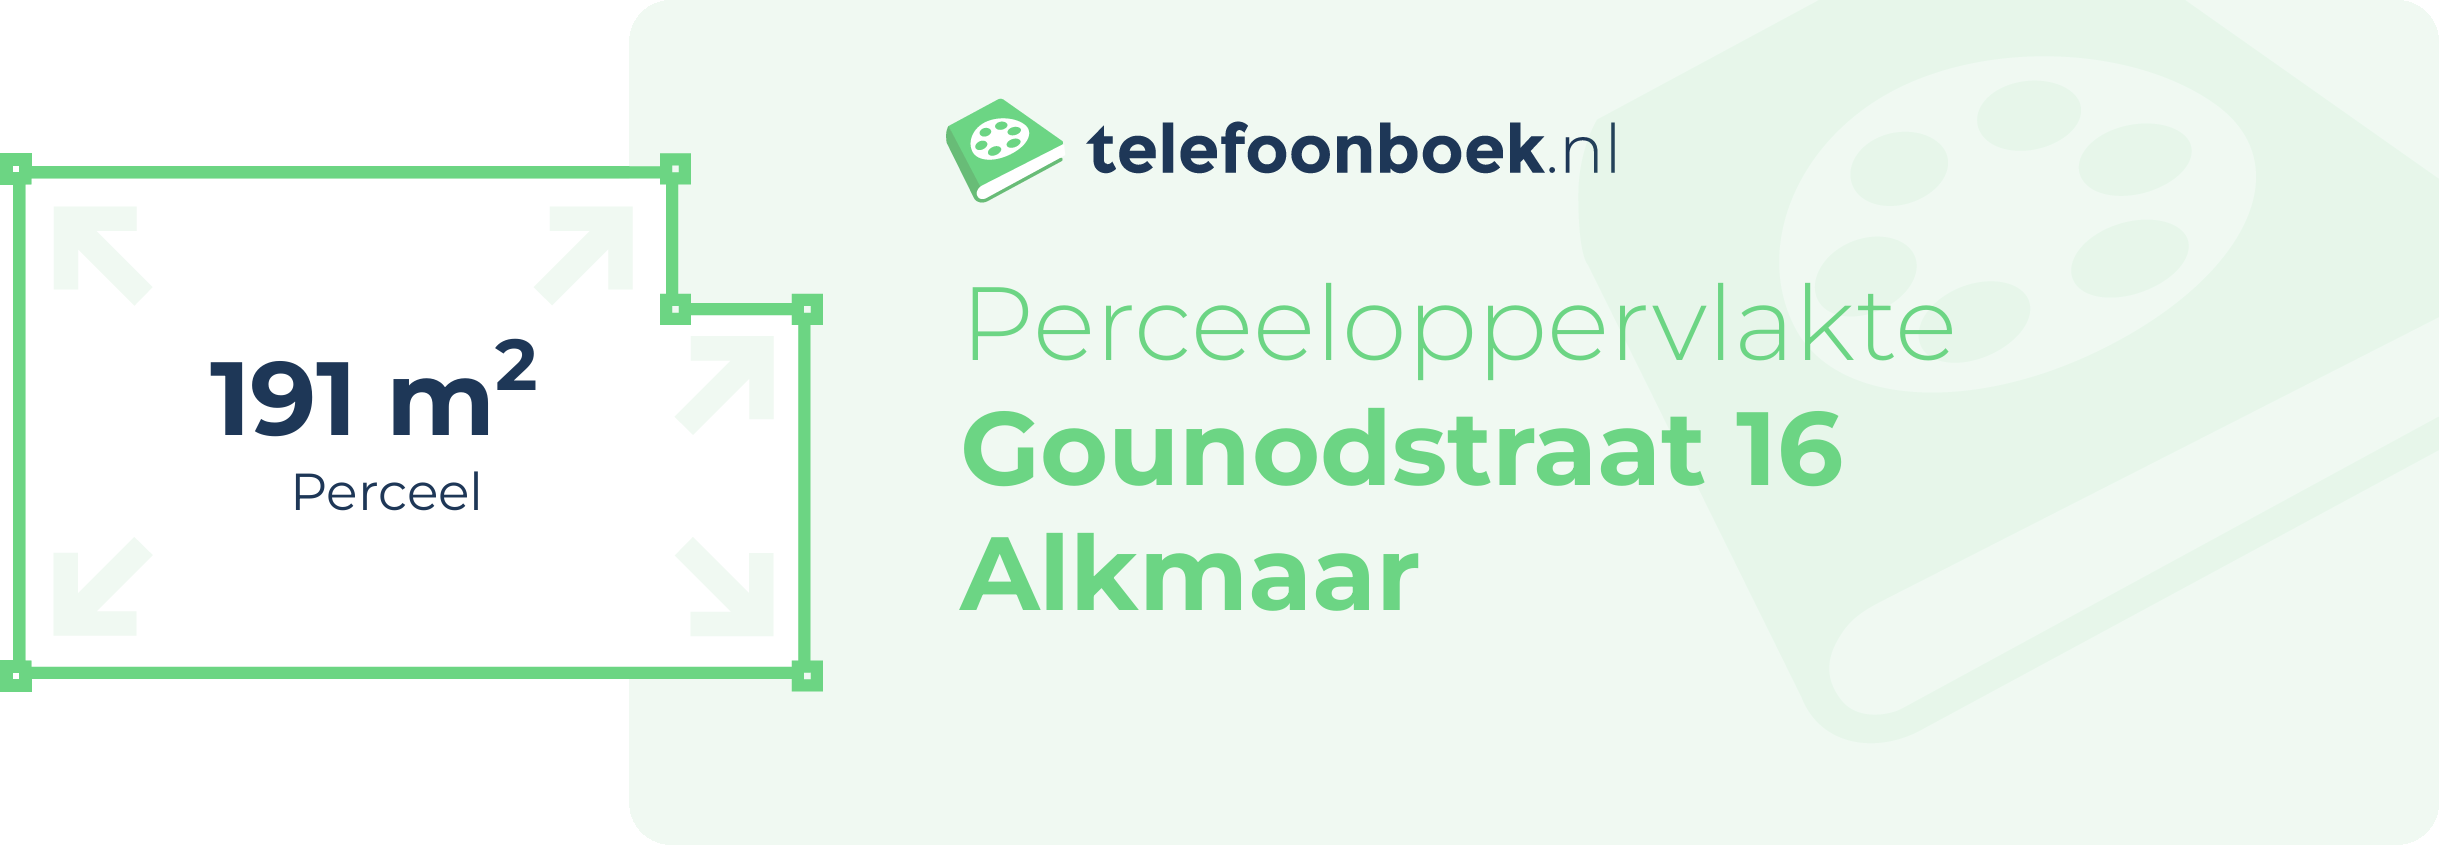 Perceeloppervlakte Gounodstraat 16 Alkmaar